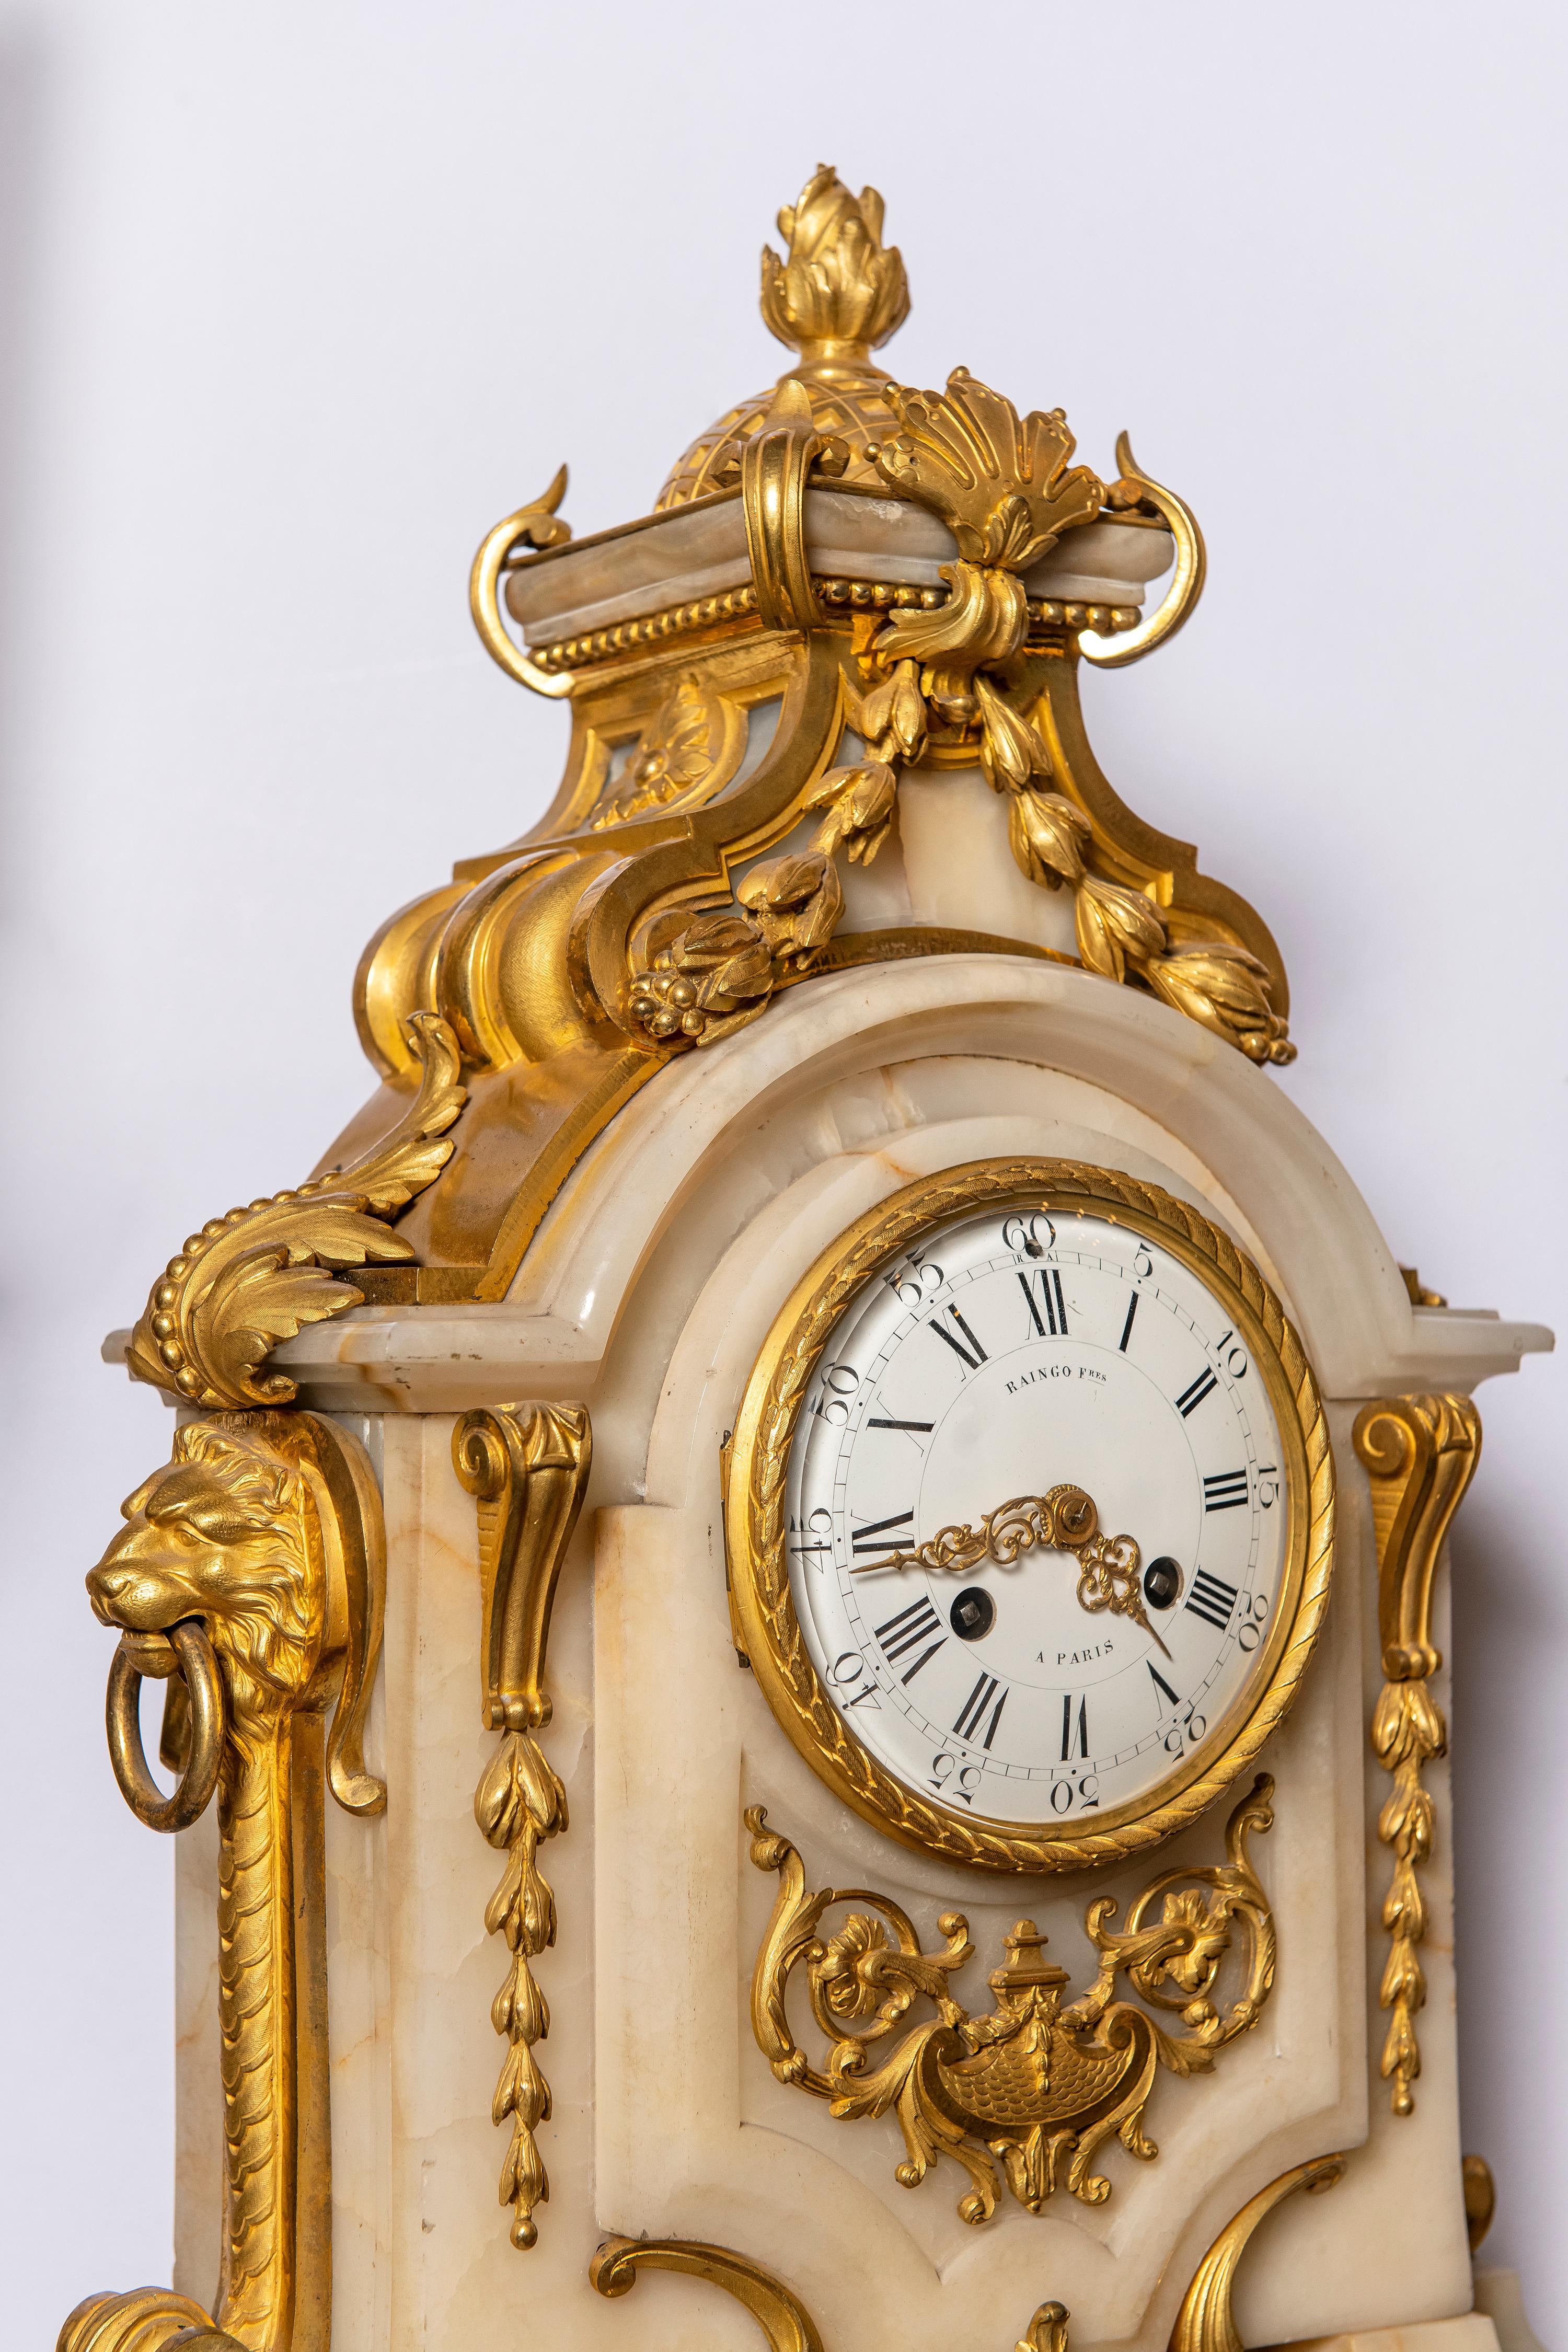 Gilt bronze and marble three piece clock garniture. Clock signed Raingo Fres. France, 19th century.
Clock works.

Clock dimensions: 71 cm height, 46 cm width, 22 cm depth.
Candelabras dimensions: 76 cm height, 39 cm width, 25 cm depth.